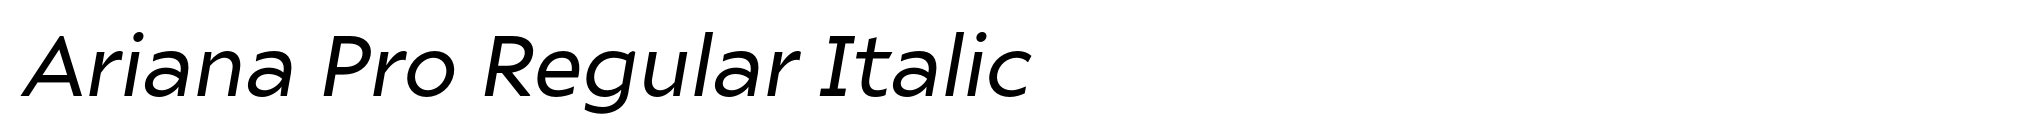 Ariana Pro Regular Italic image